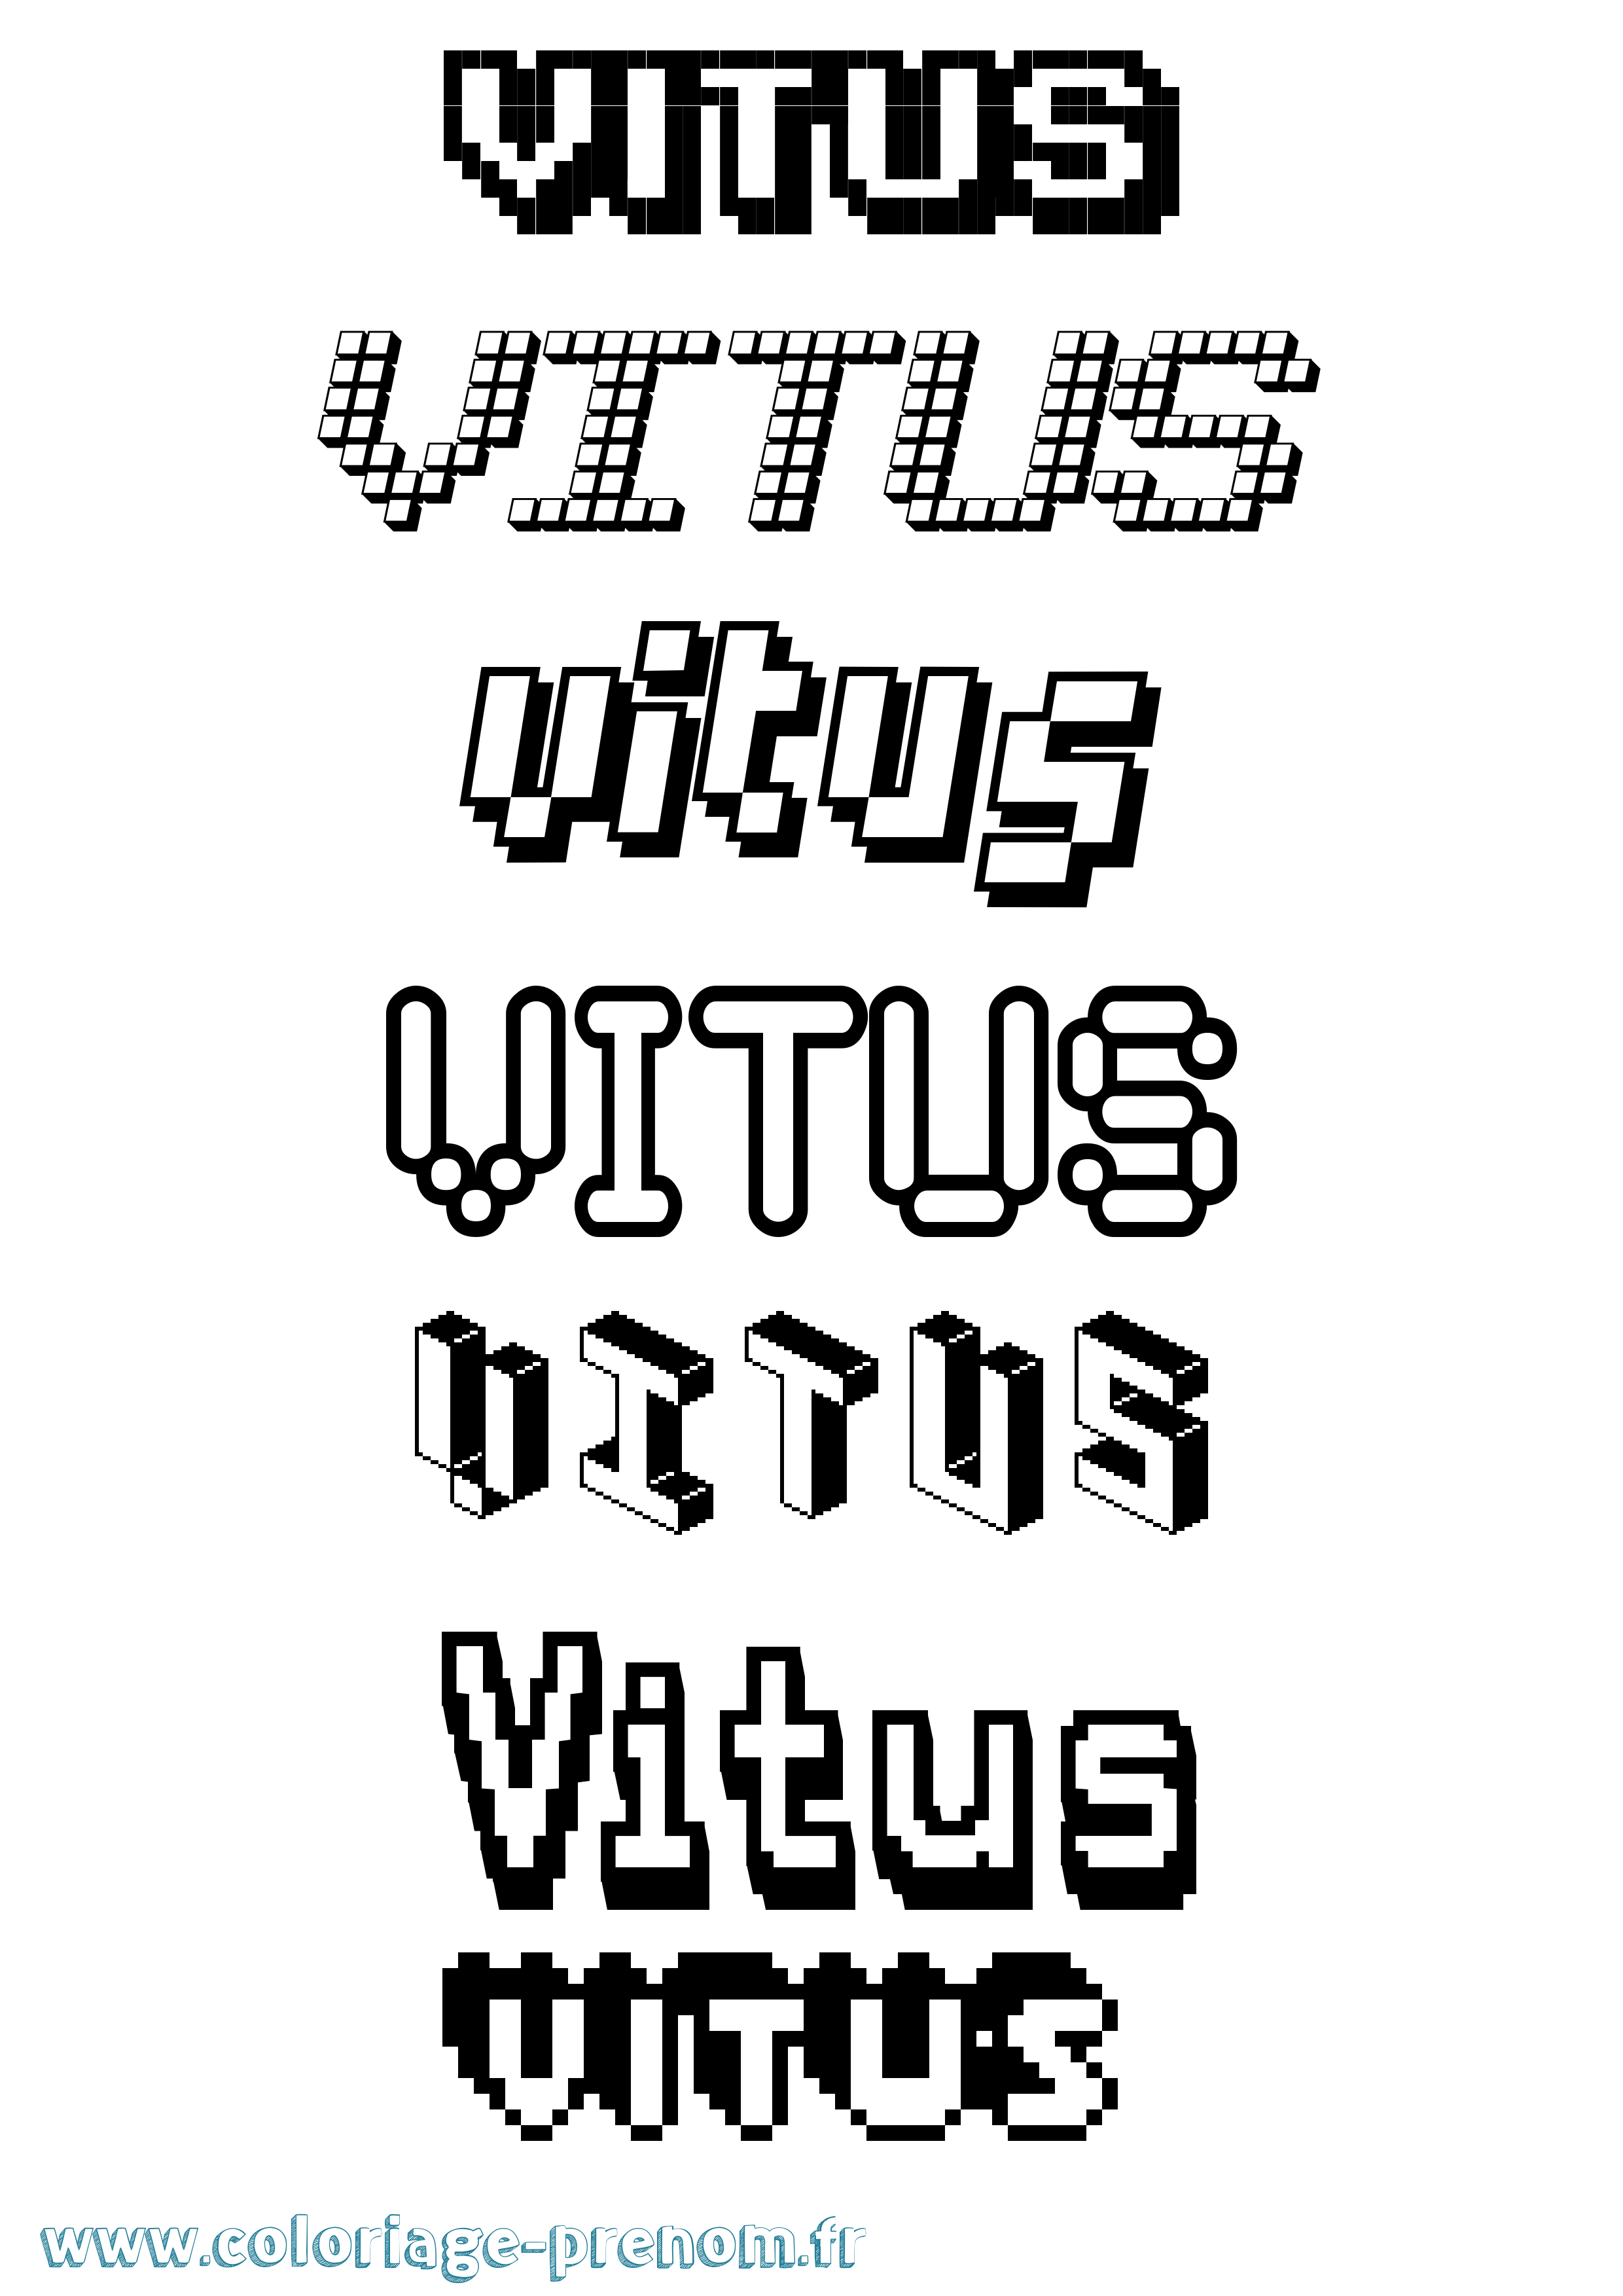 Coloriage prénom Vitus Pixel